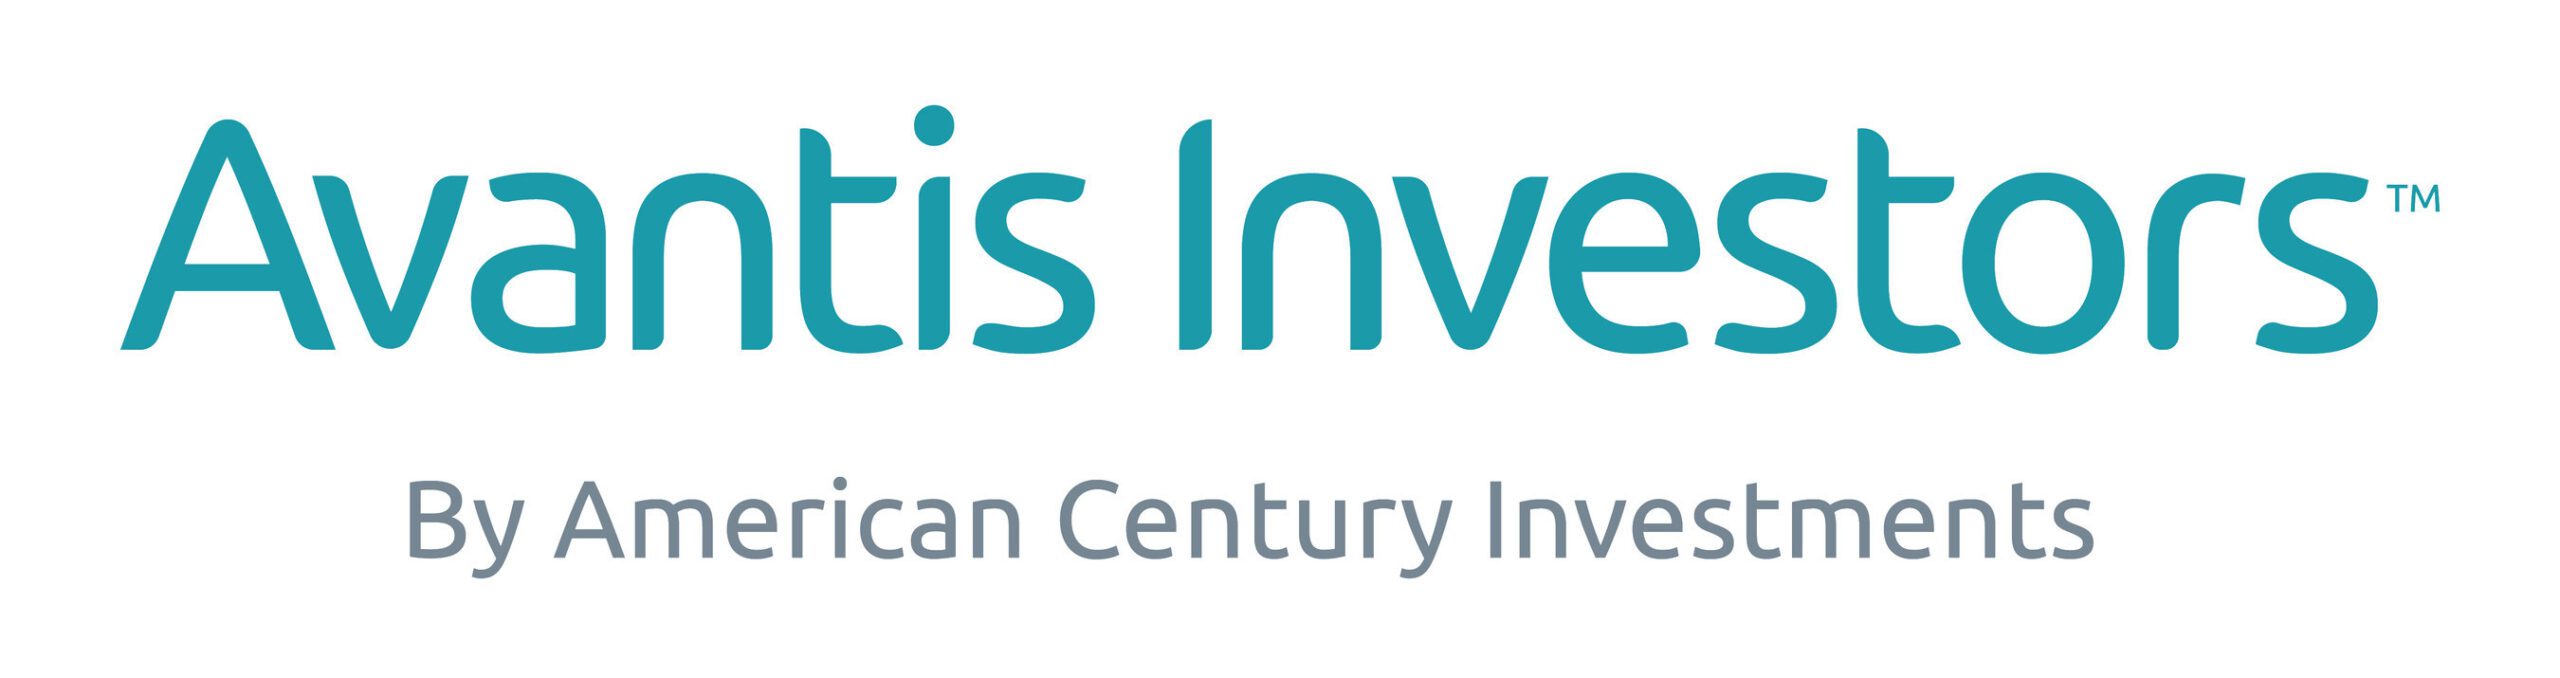 Avantis Investors By American Century Investments